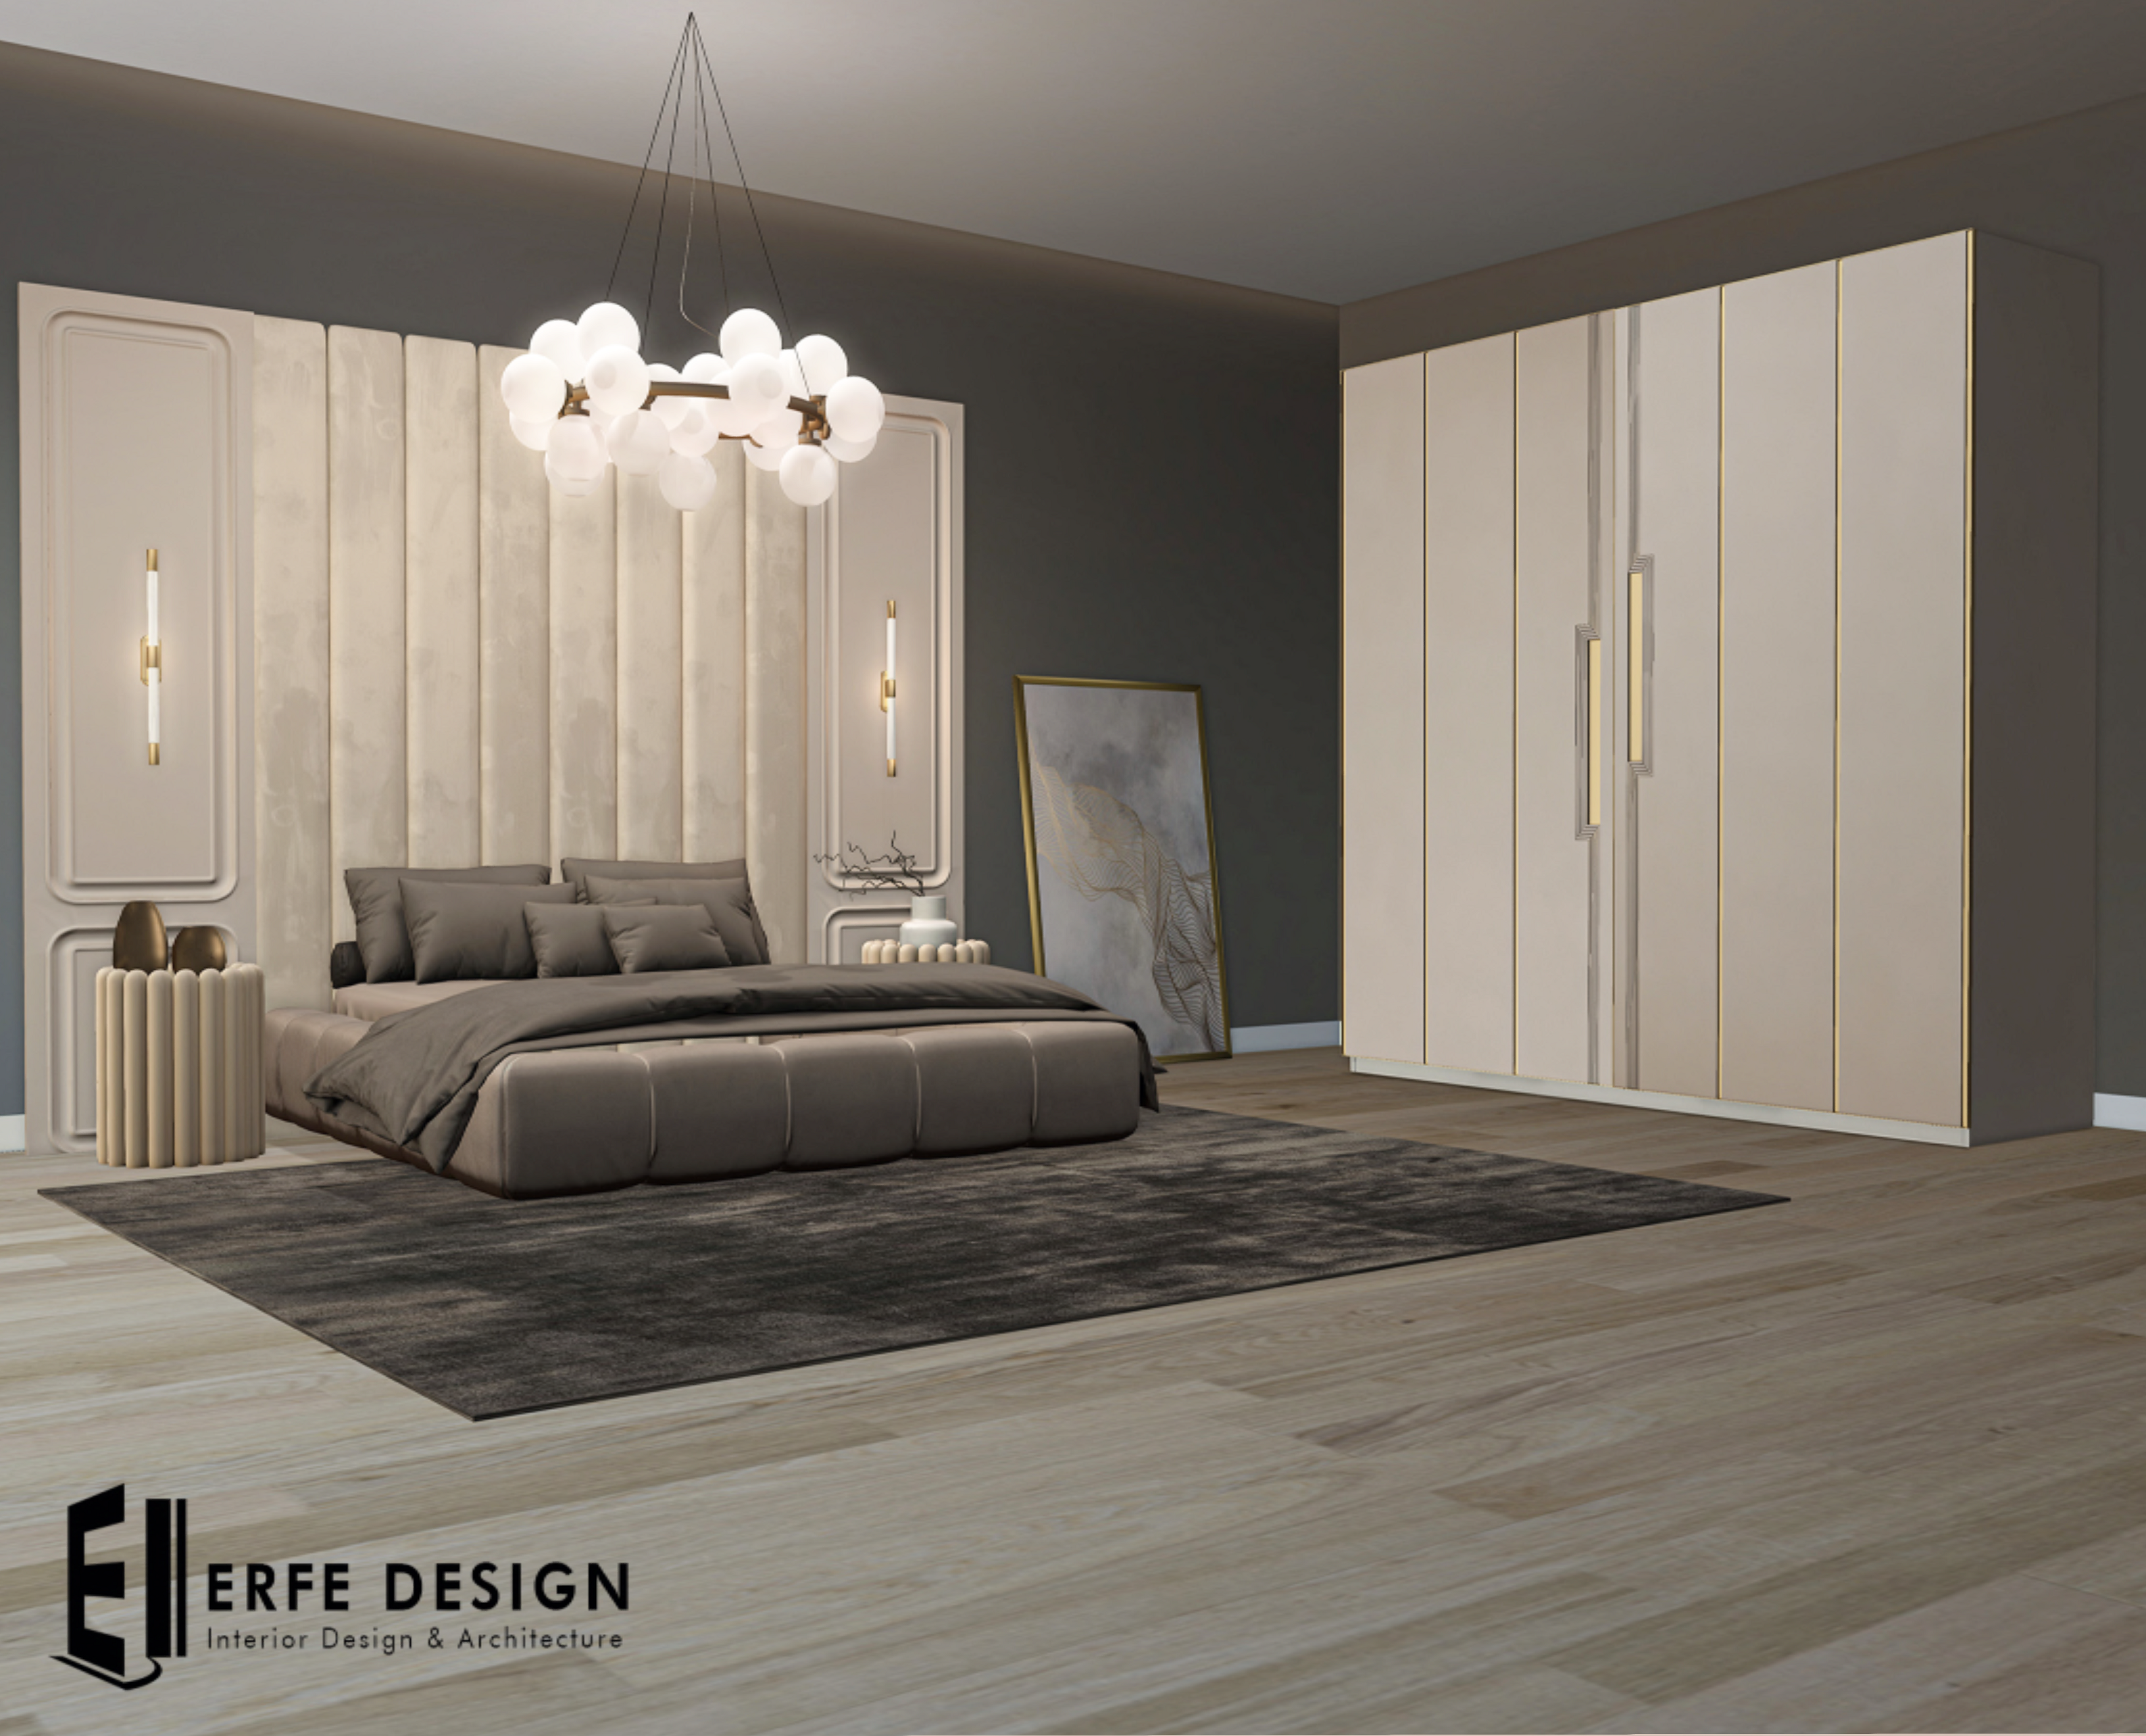 Erfe Design – Elanor Bedroom Set